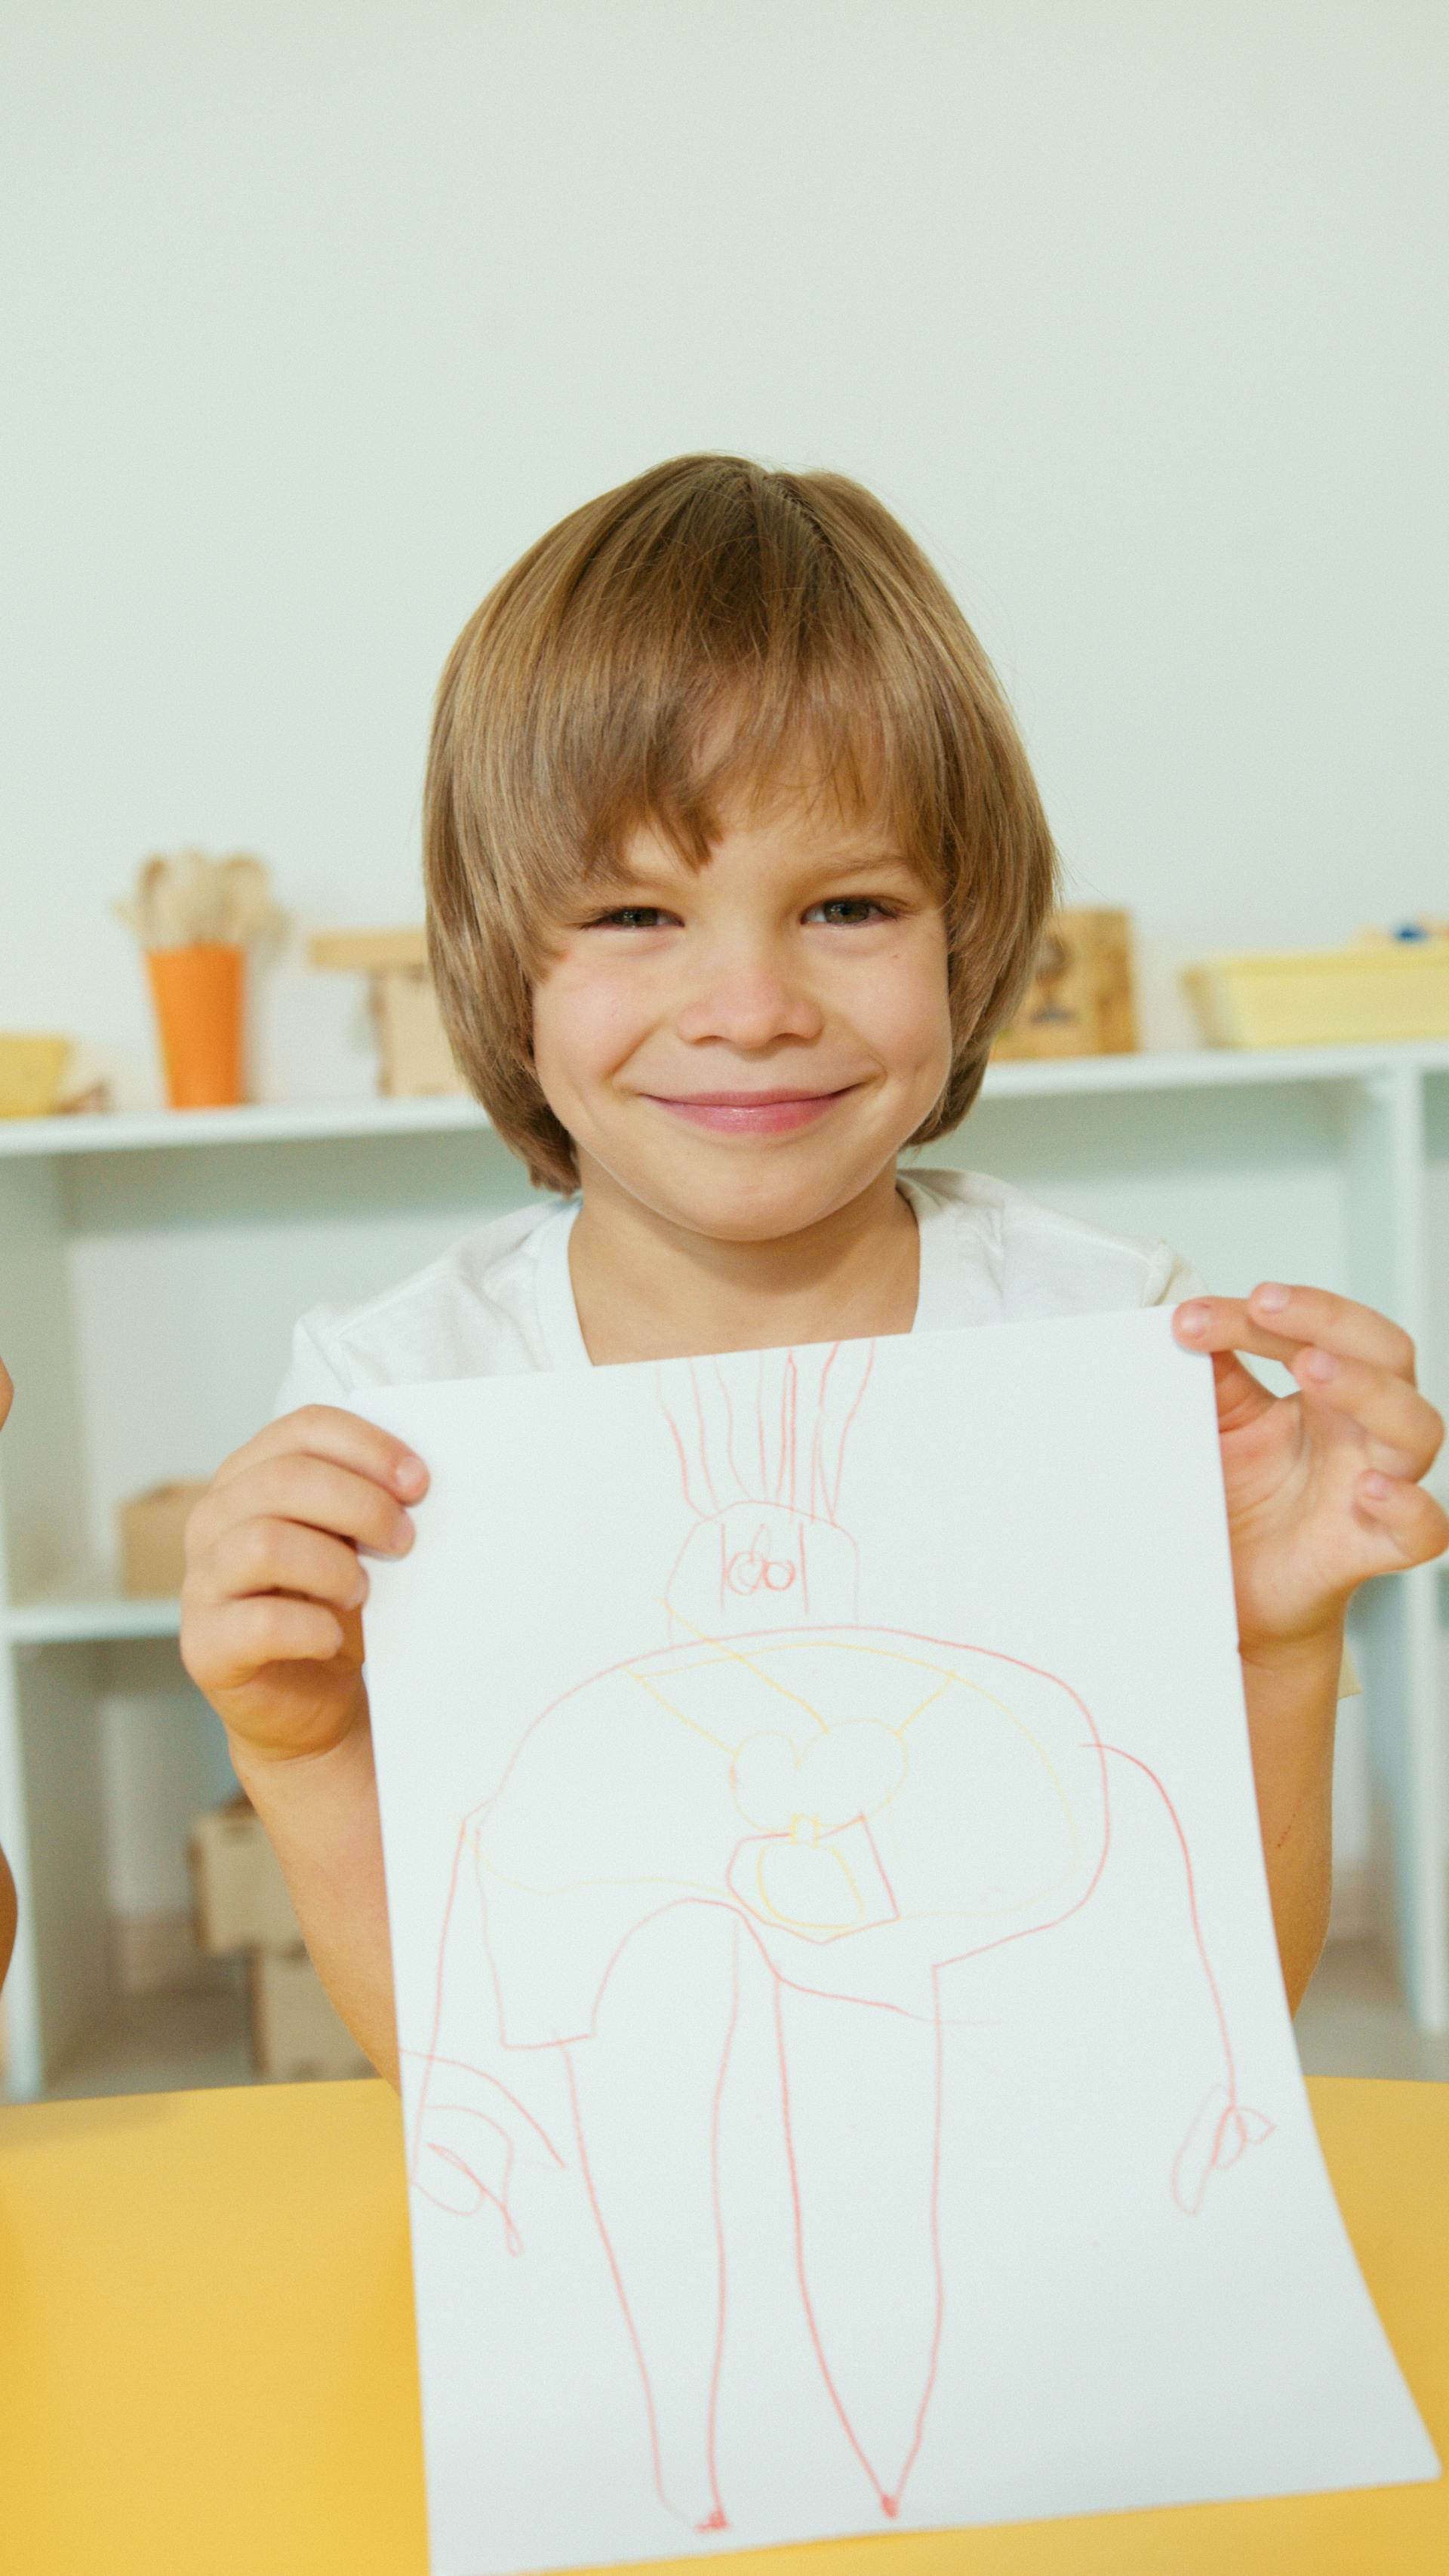 A smiling little boy showing his artwork | Source: Pexels